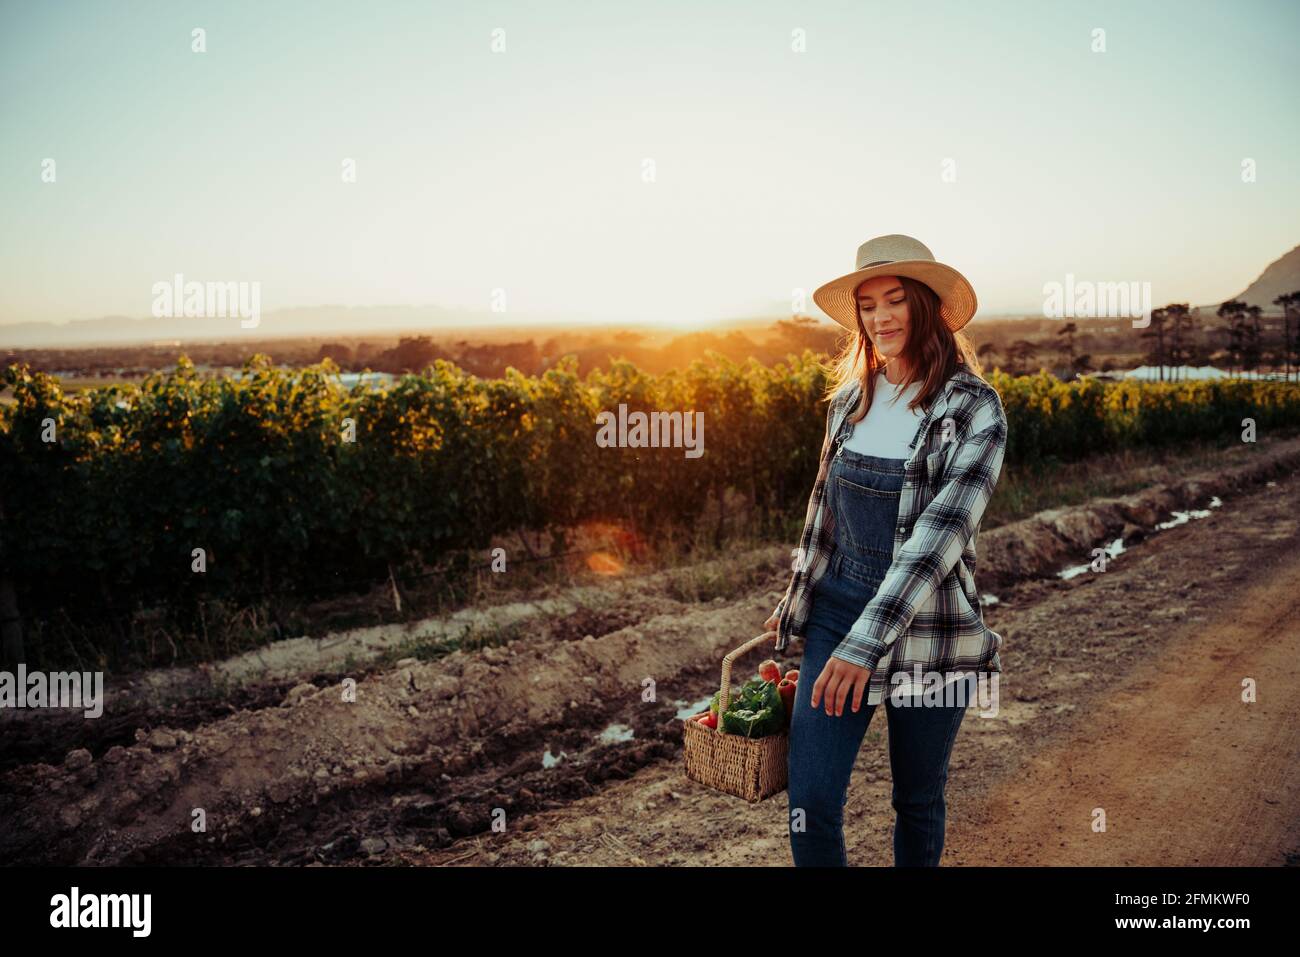 Caucasian female farmer walking through vineyards with fresh vegetables in basket Stock Photo